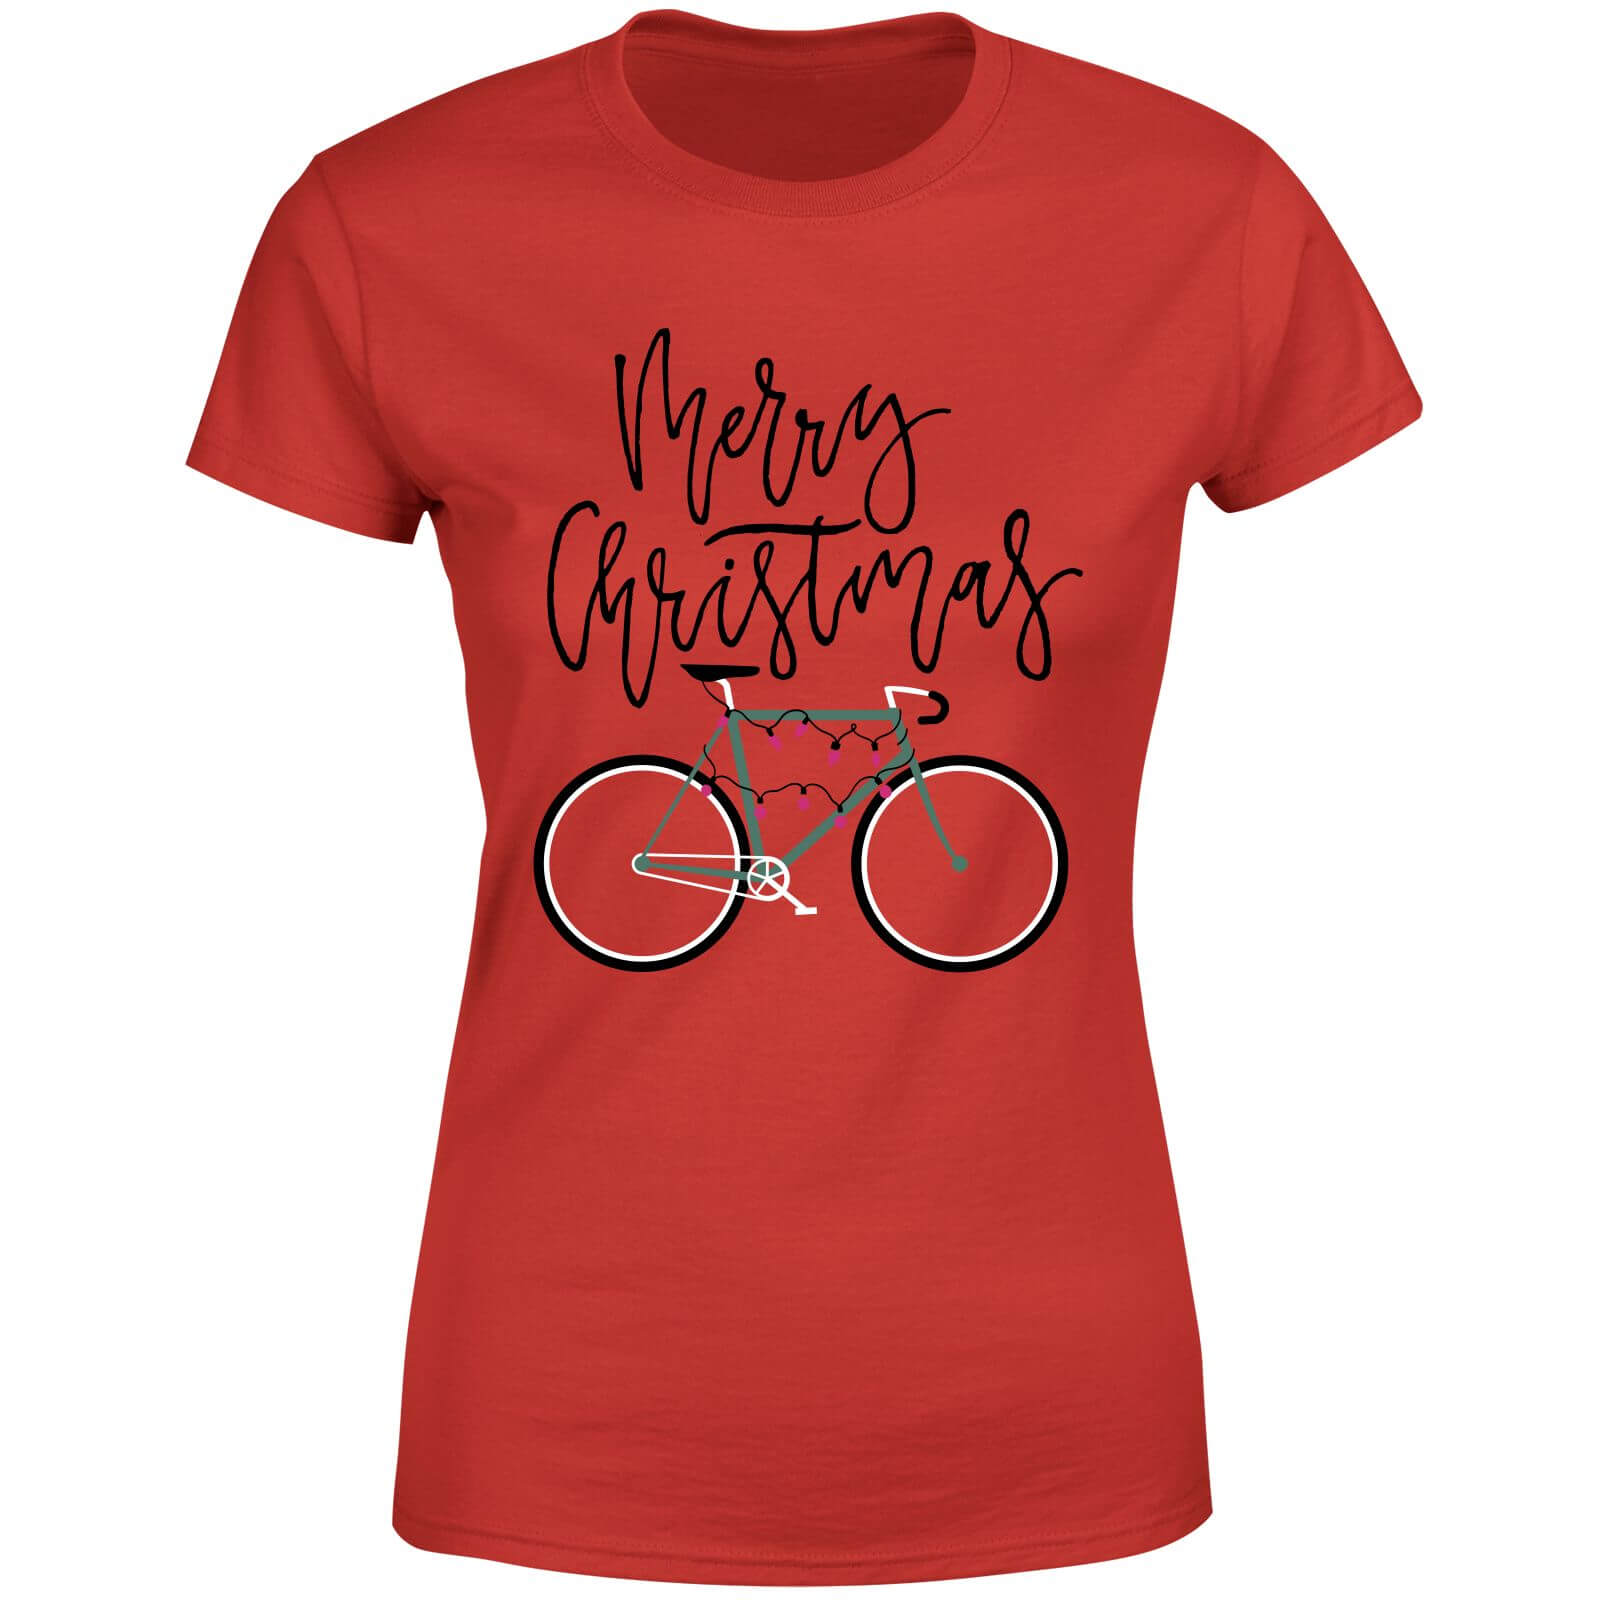 Bike Lights Women's Christmas T-Shirt - Red - M